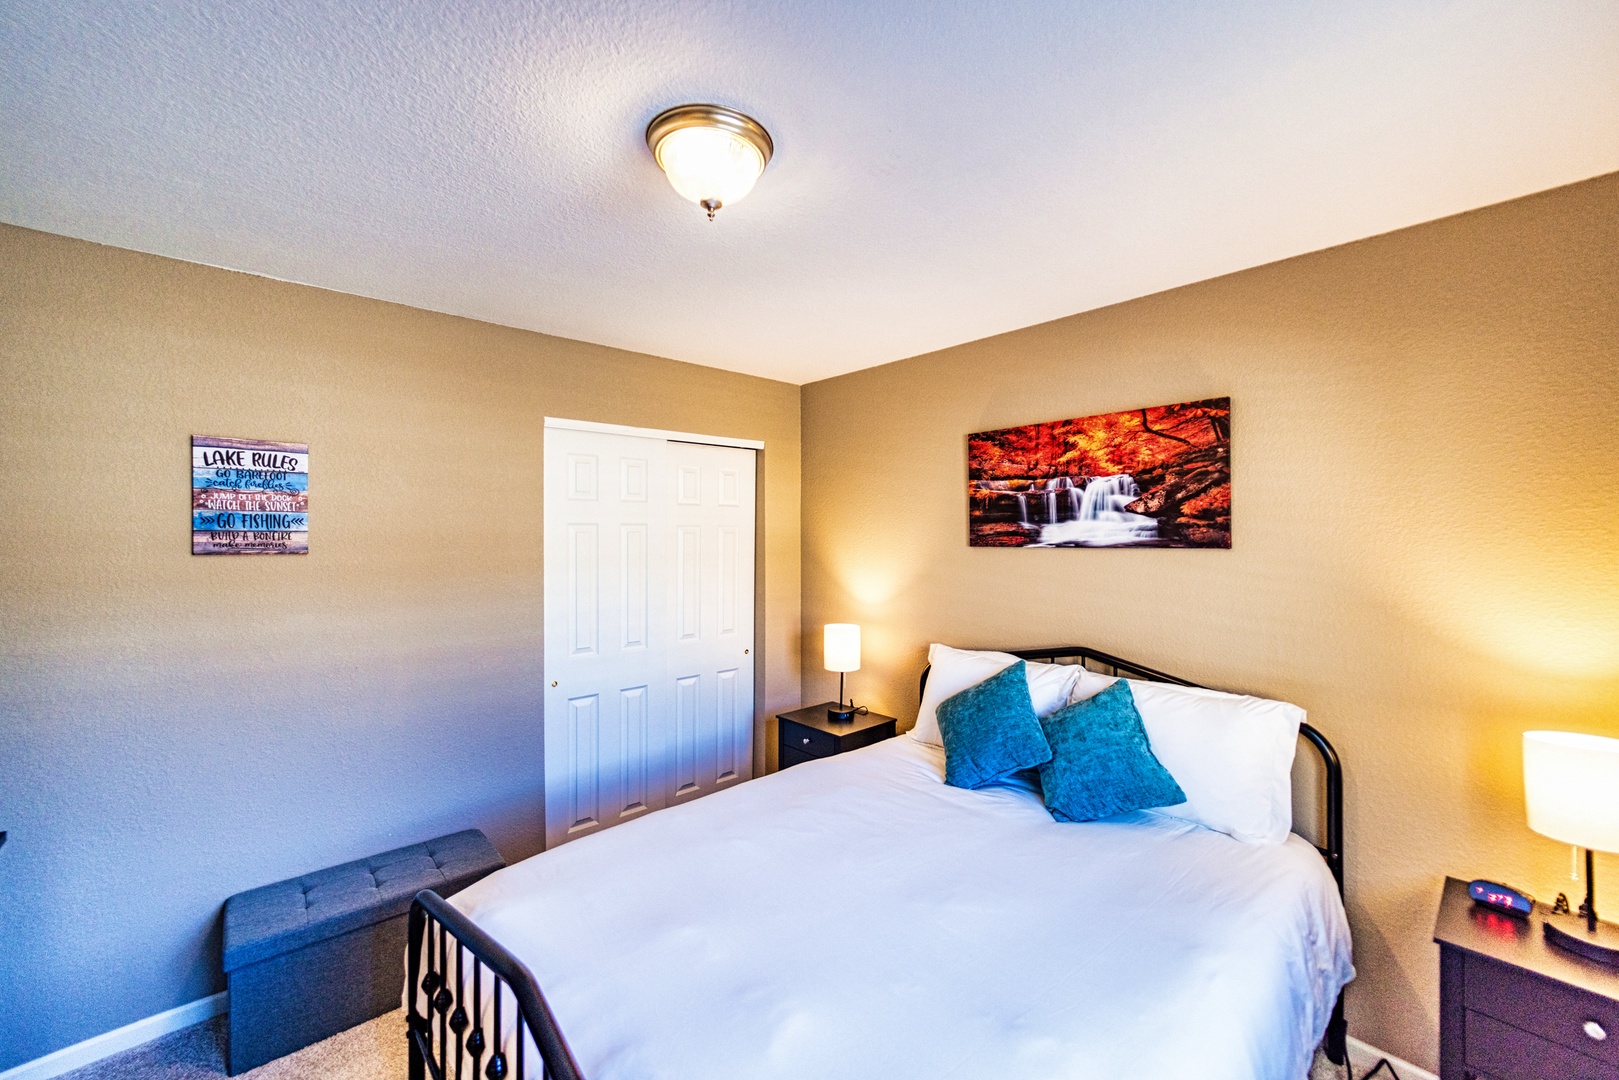 The second bedroom offers a queen bed, Smart TV, & Nintendo